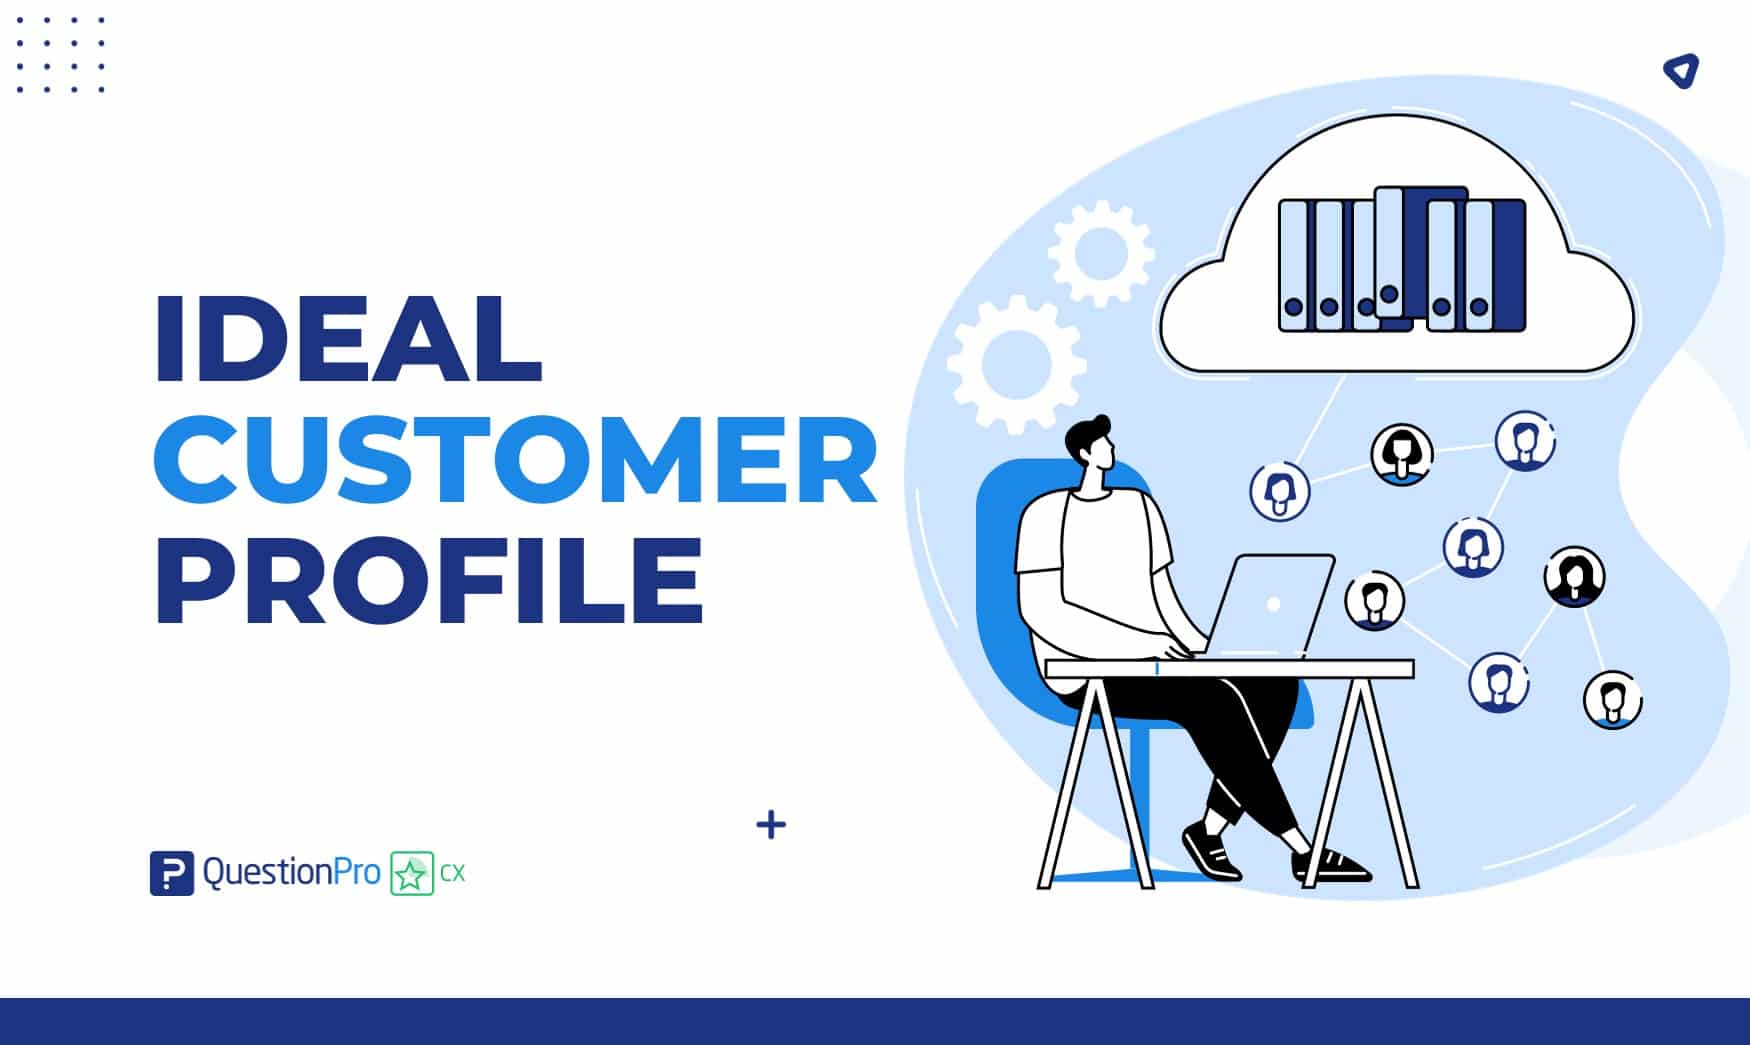 An ideal customer profile